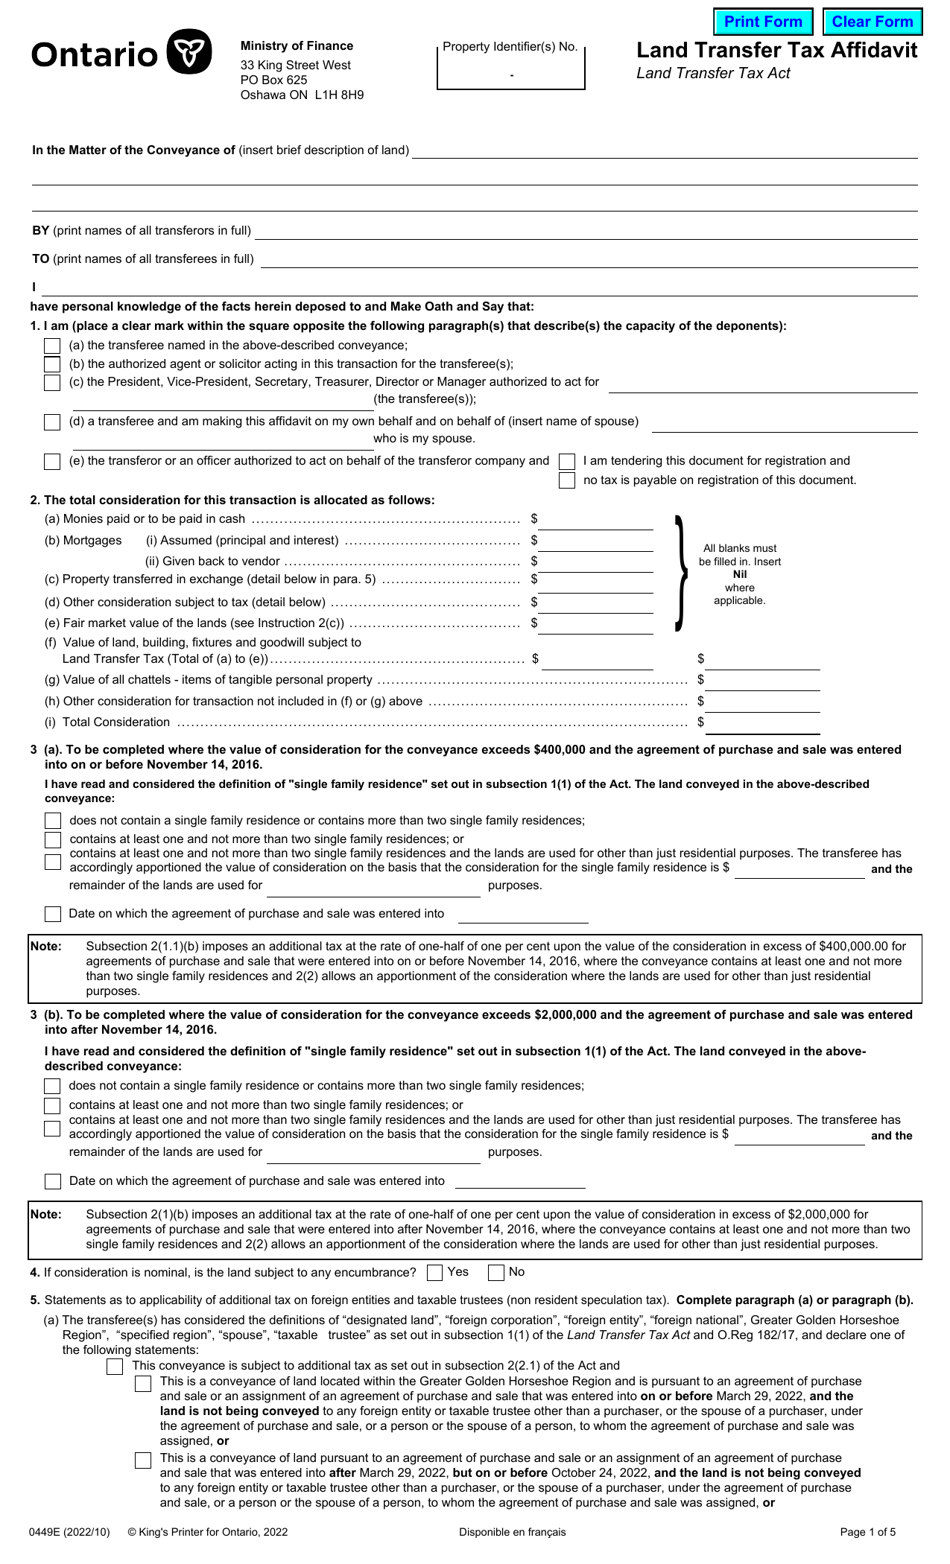 Form 0449E Land Transfer Tax Affidavit - Ontario, Canada, Page 1